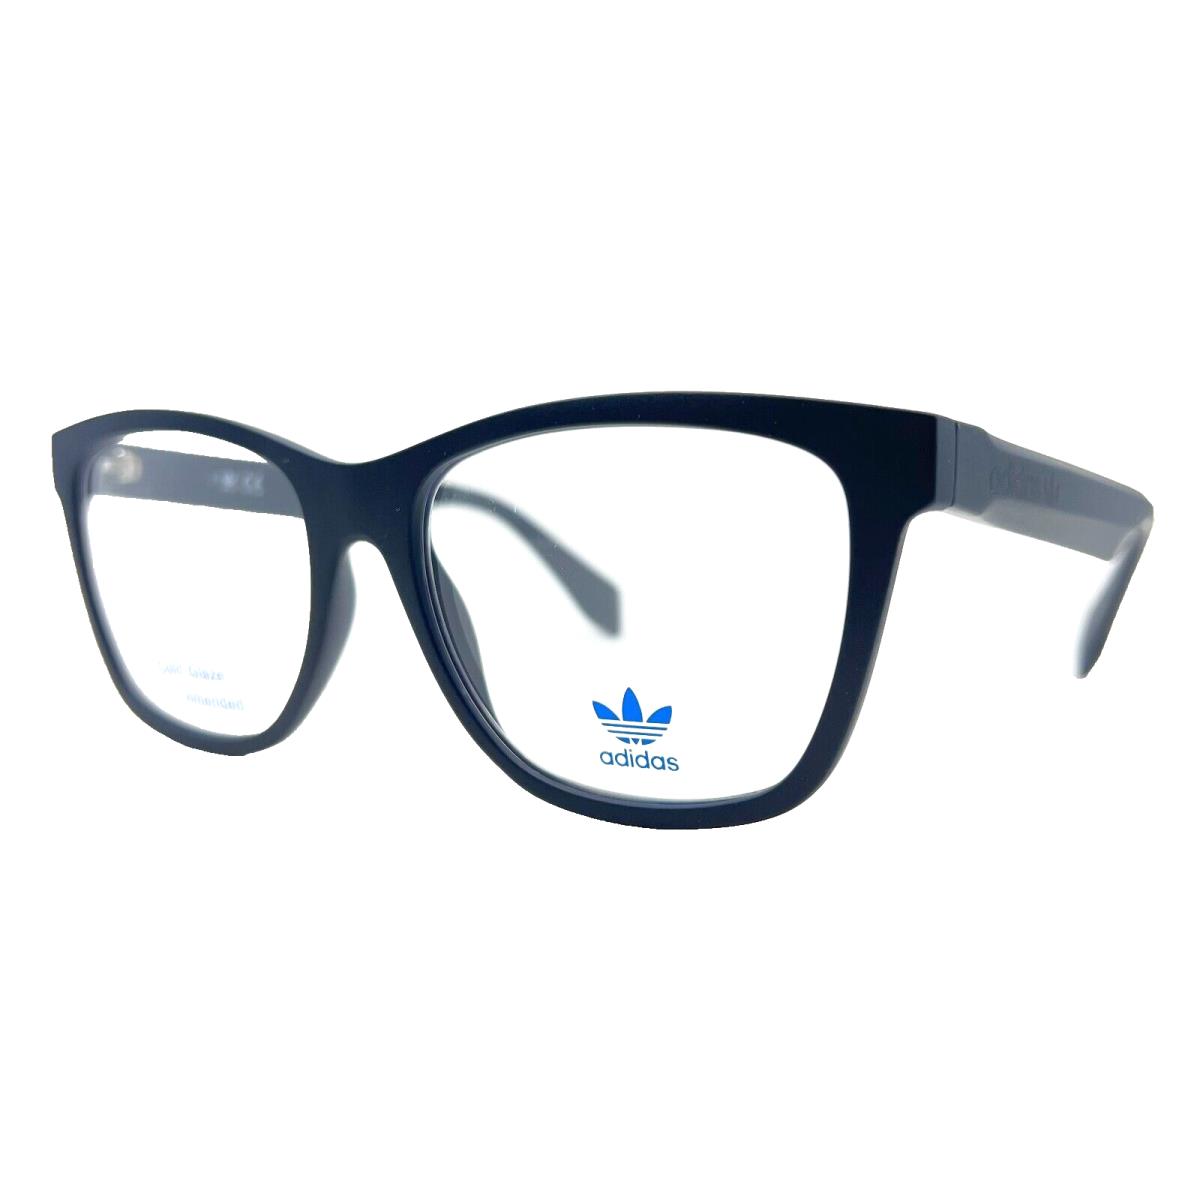 Adidas Originals - OR5025 092 54/16/145 - Blue - Eyeglasses Case